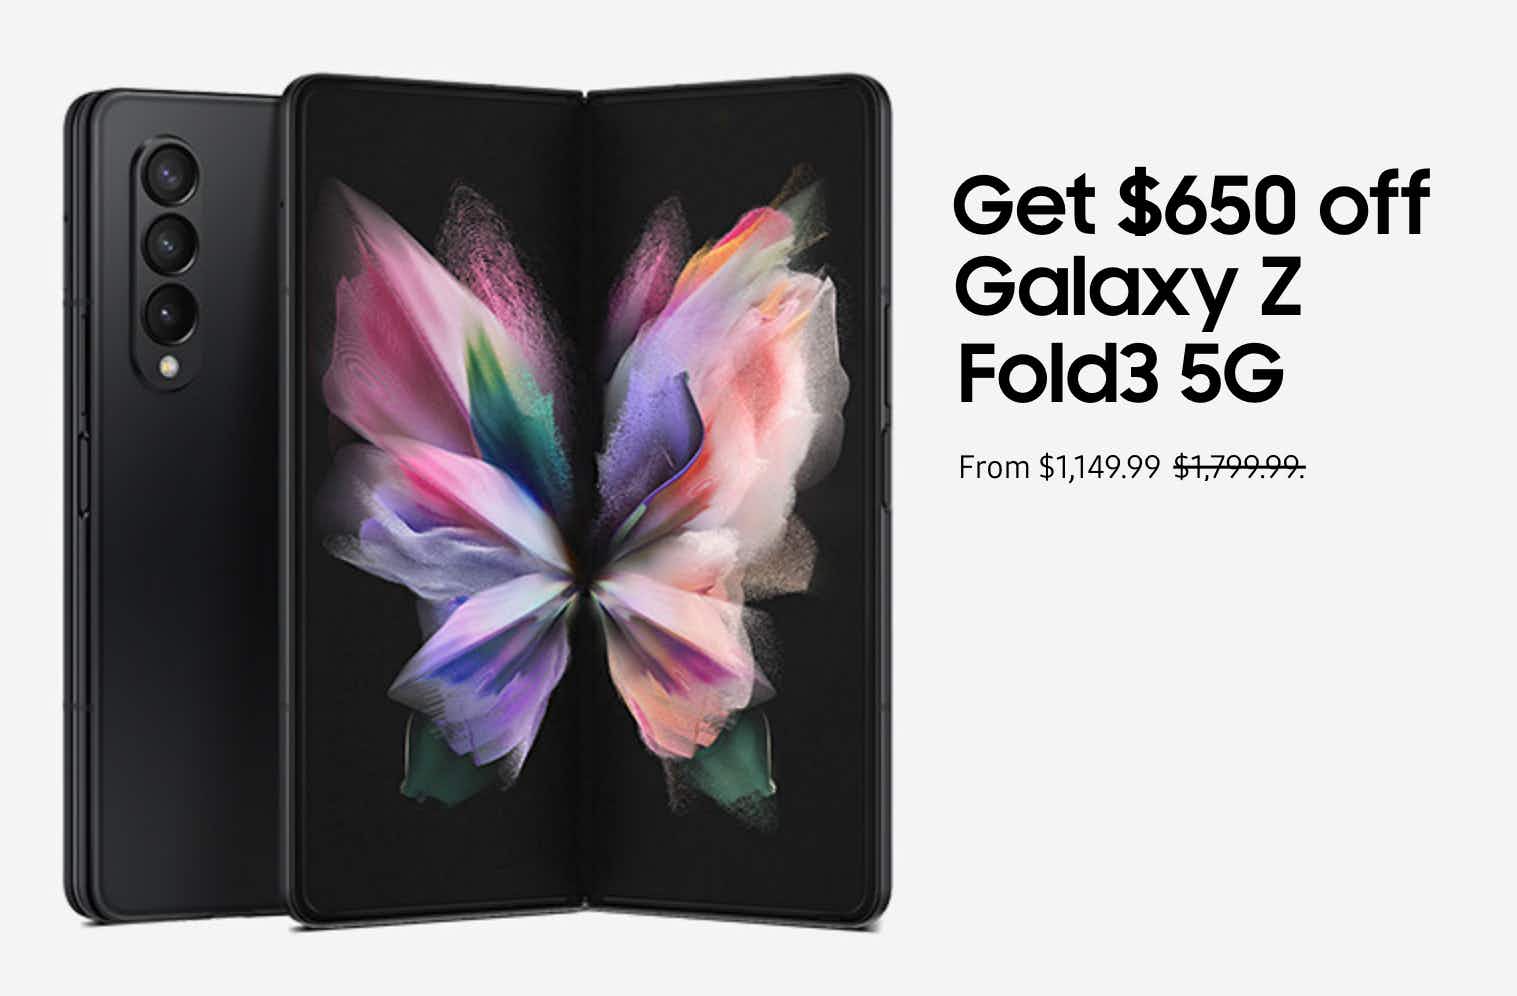 samsung promo for $650 off galaxy z fold3 5g smartphone